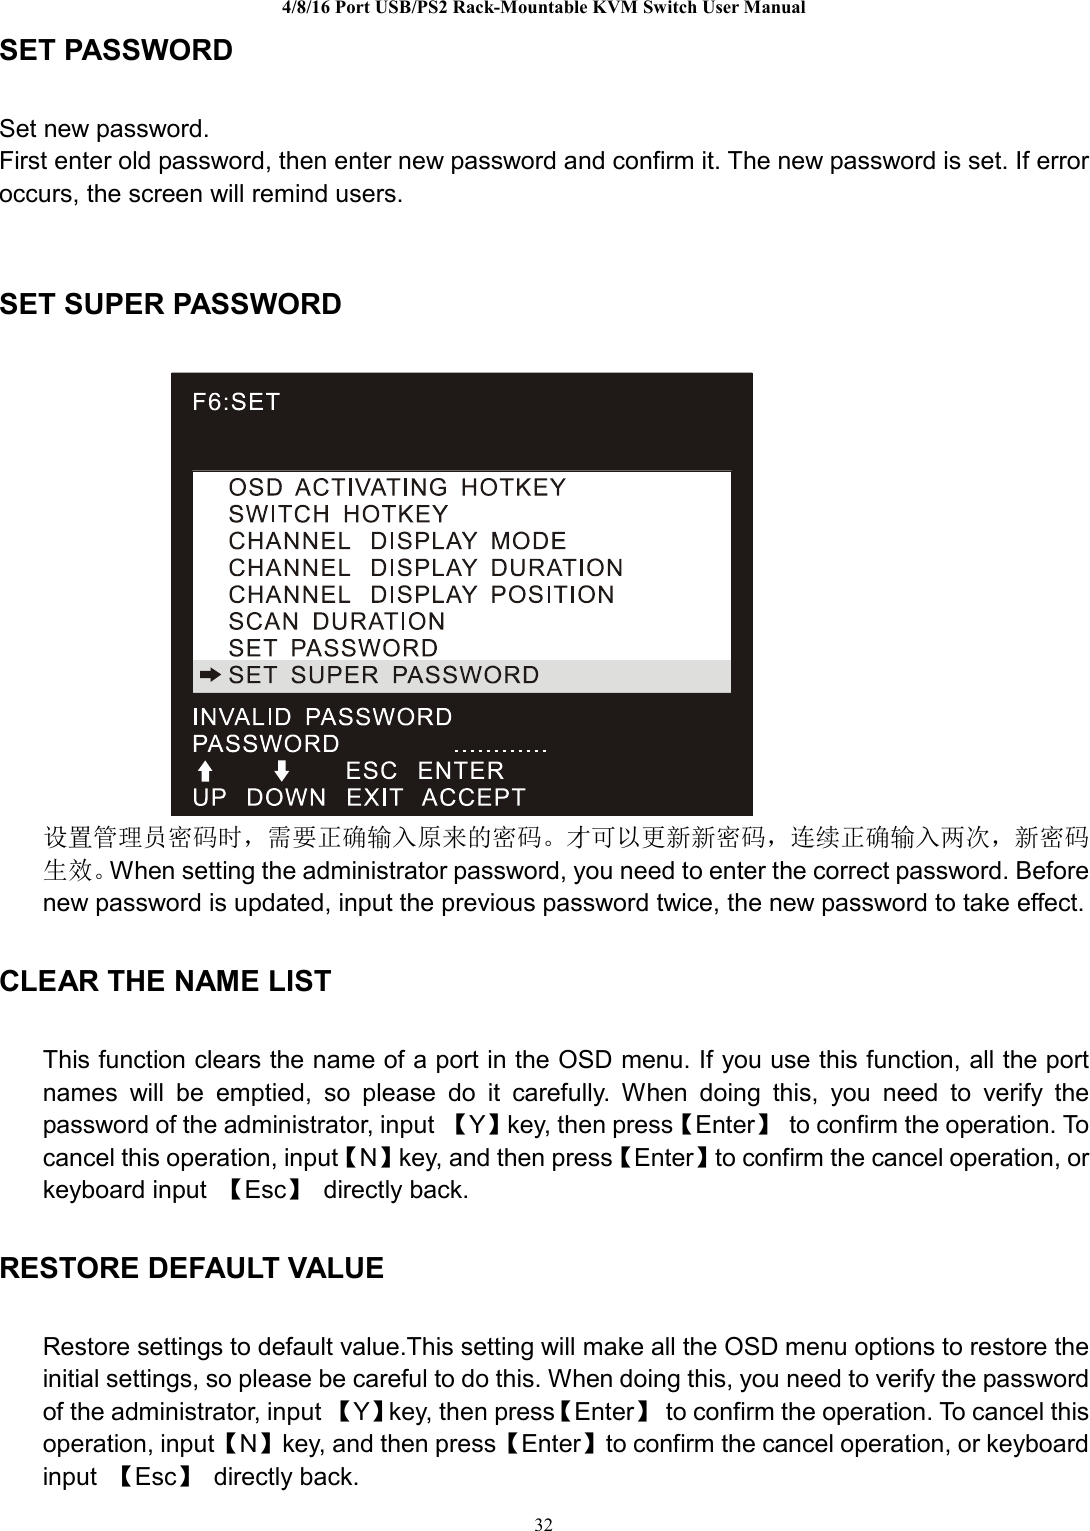 4/8/16 Port USB/PS2 RackMountable KVM Switch User Manual 32  SET PASSWORD 4!SET SUPER PASSWORD  设置管理员密码时，需要正确输入原来的密码。才可以更新新密码，连续正确输入两次，新密码生效。5.CLEAR THE NAME LIST &apos;49!         5       【6】.【2】 【0】.【2】. 【2】 .RESTORE DEFAULT VALUE &quot;.&apos;495【6】.【2】 【0】.【2】. 【2】 .